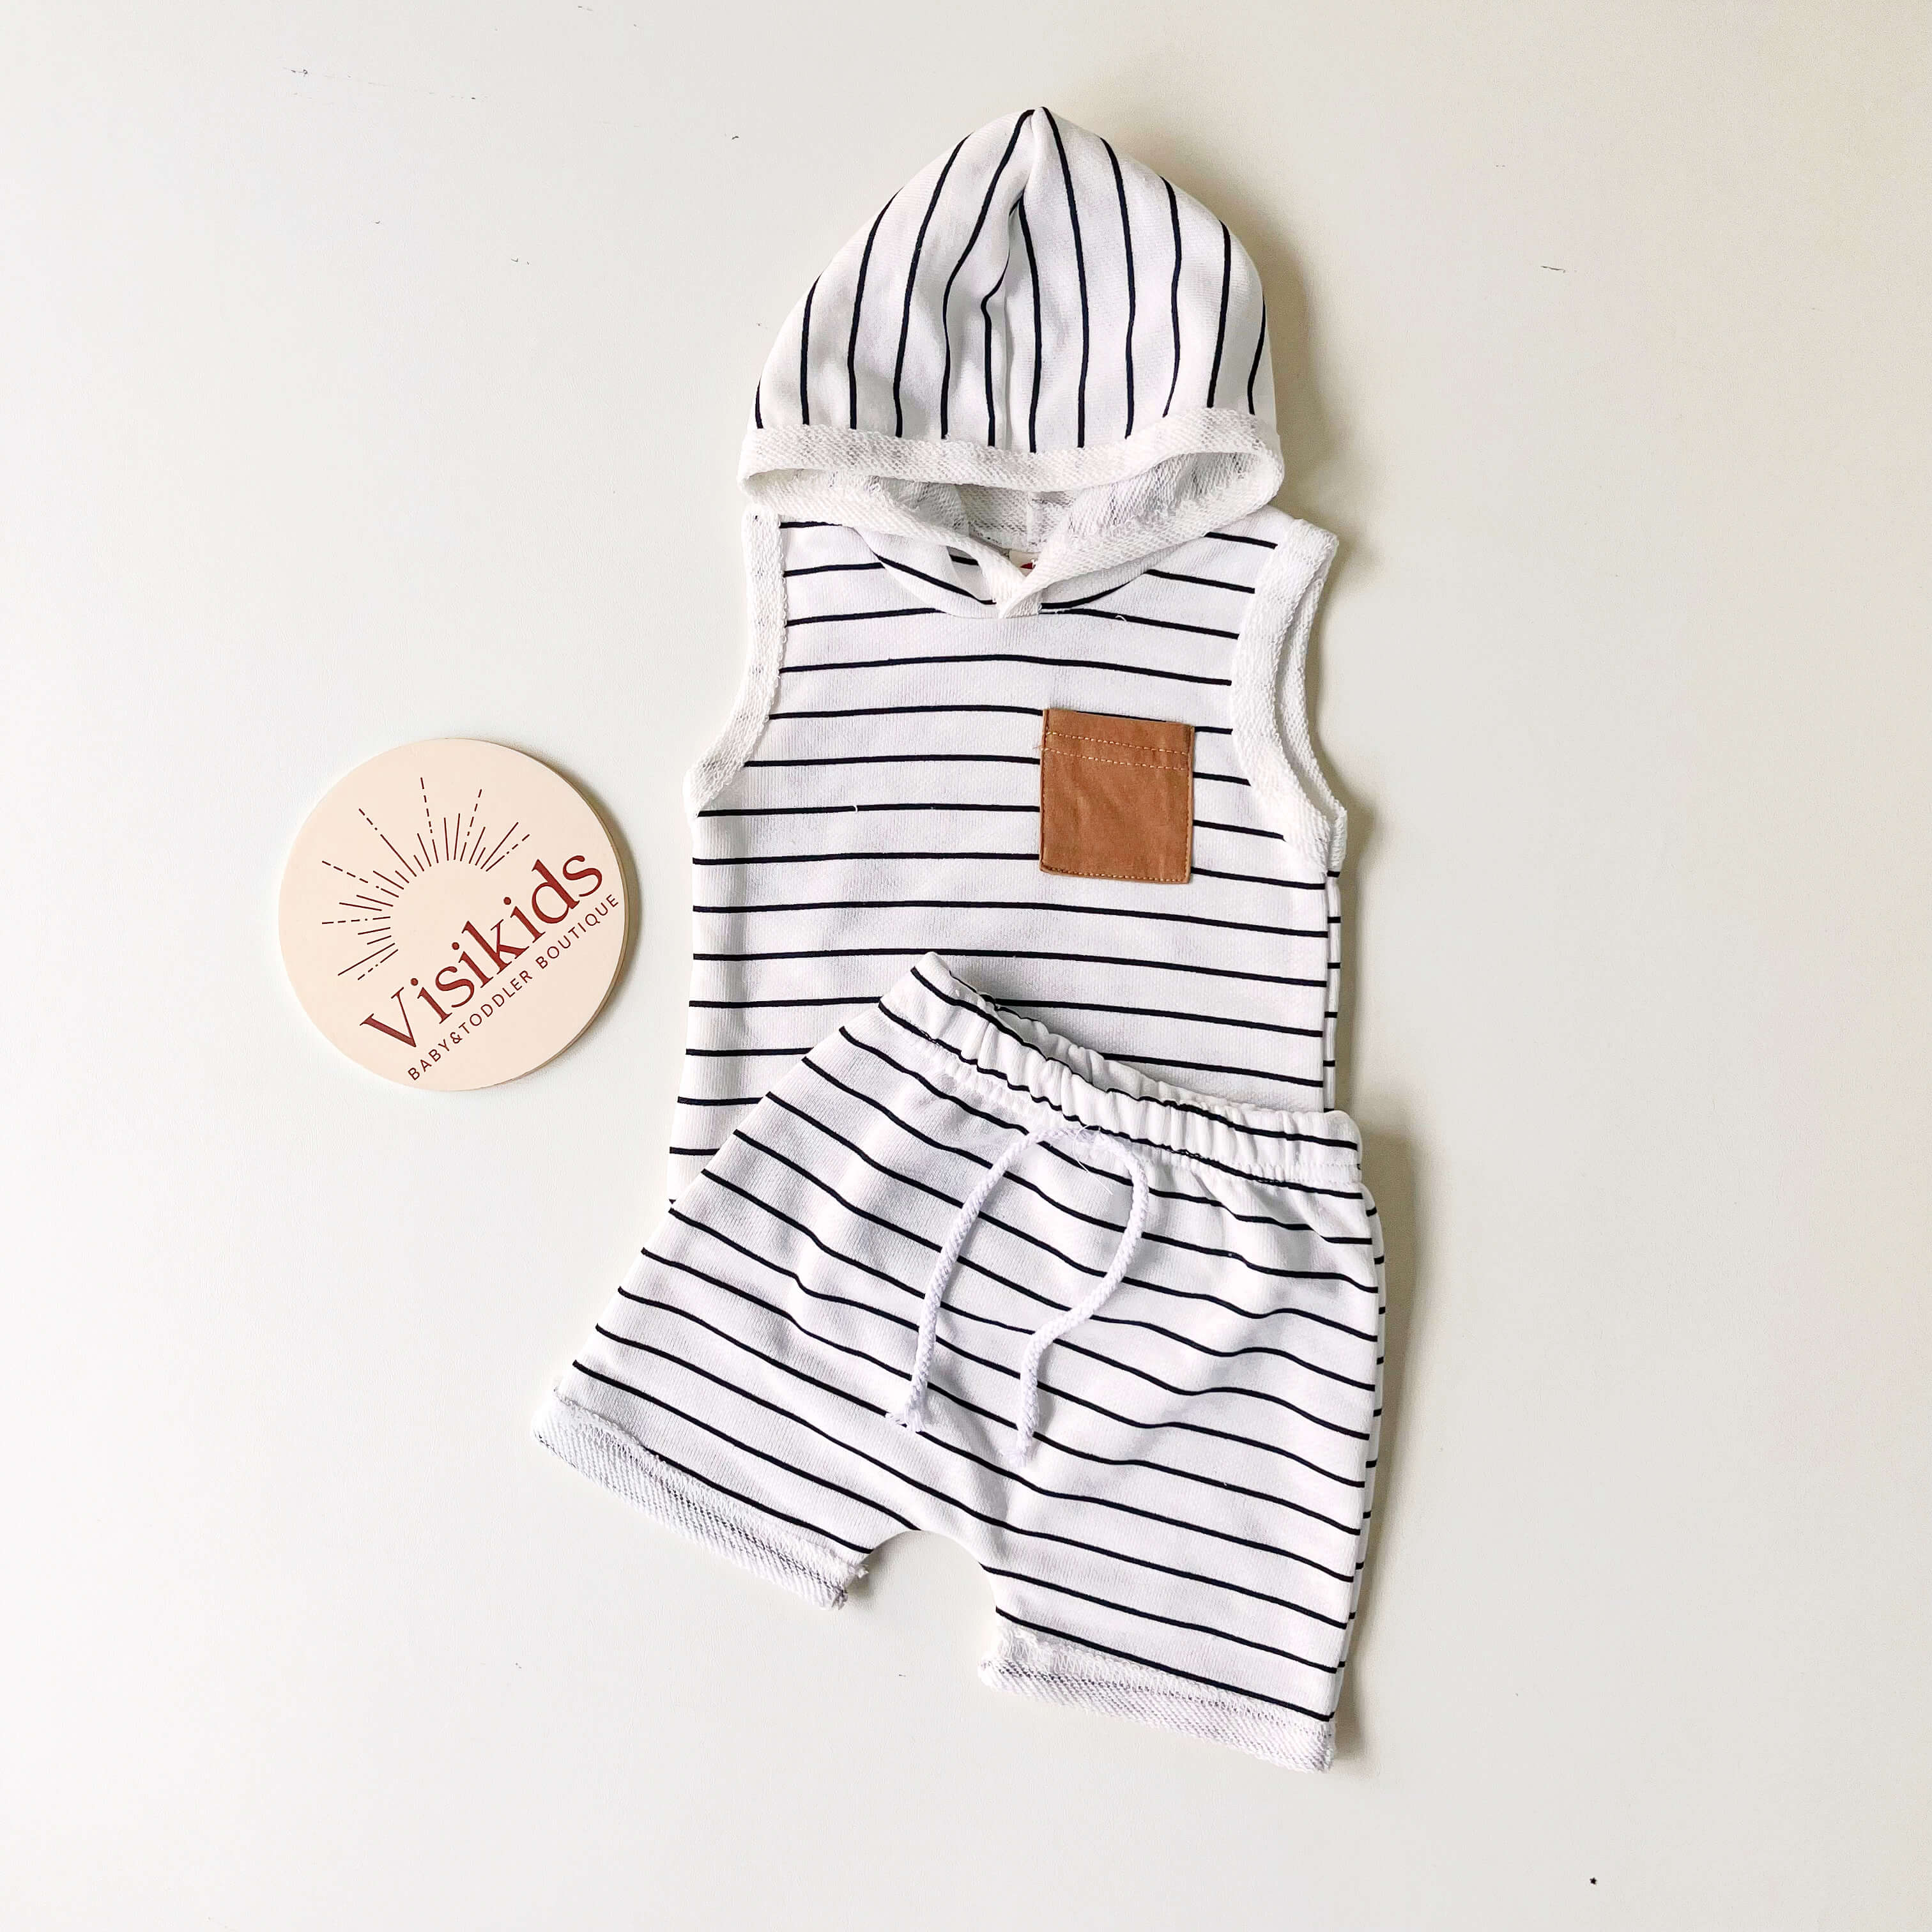 Baby Stripe Hooded Set